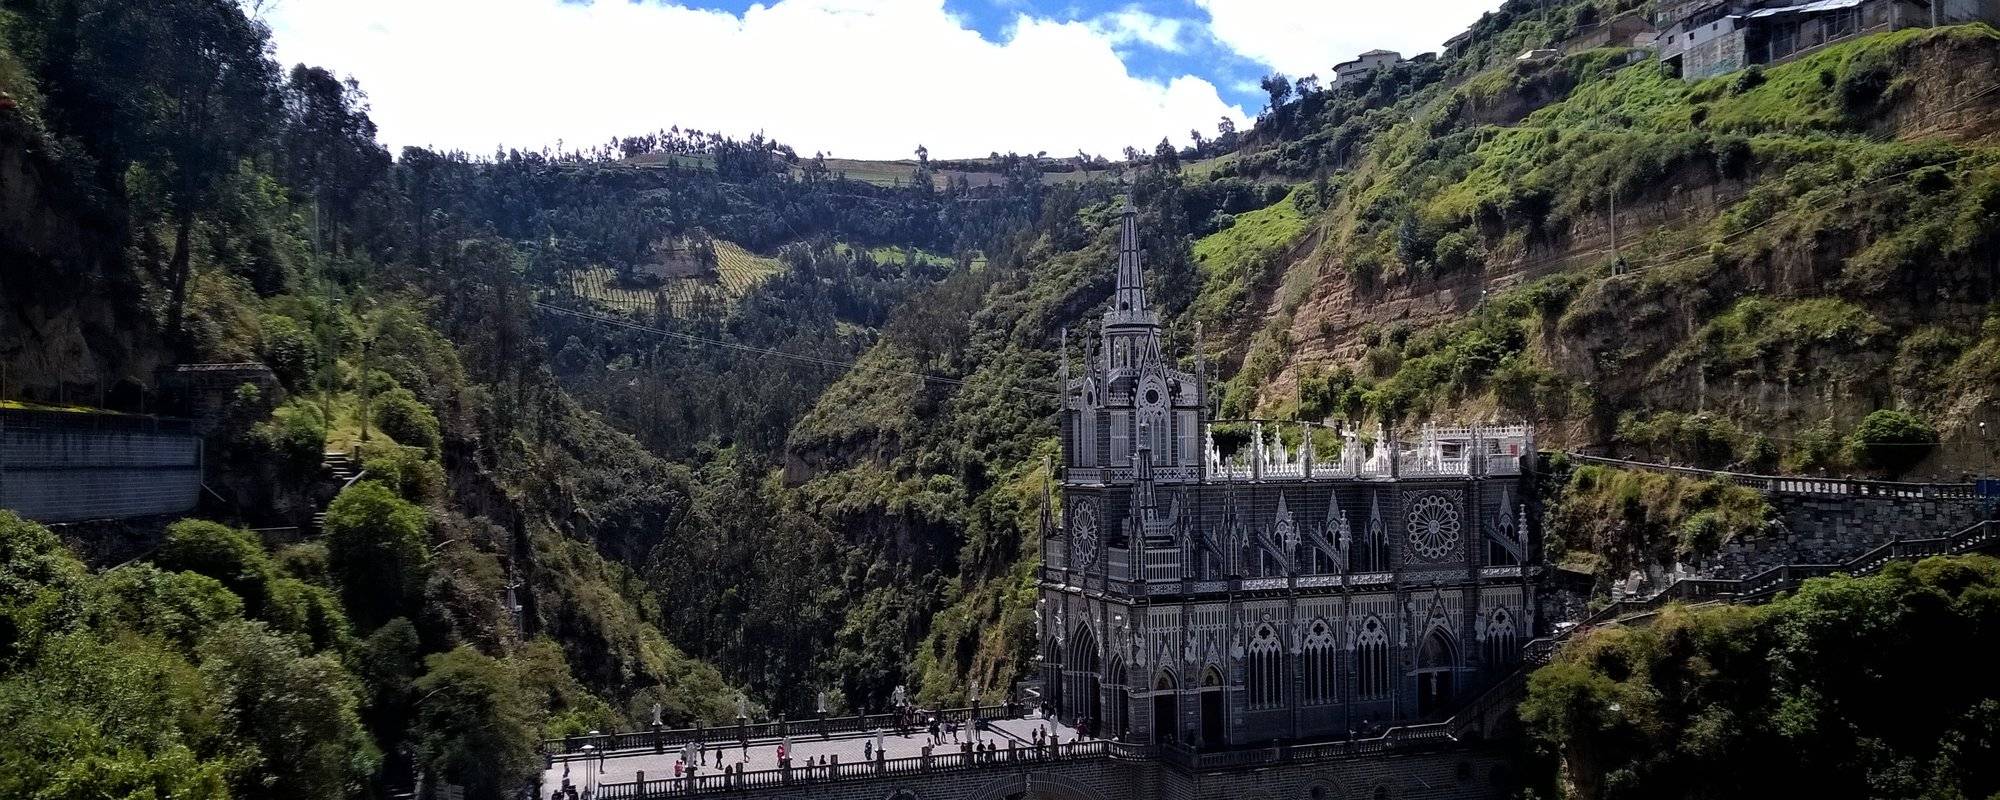 Las Lajas sanctuary in Colombia